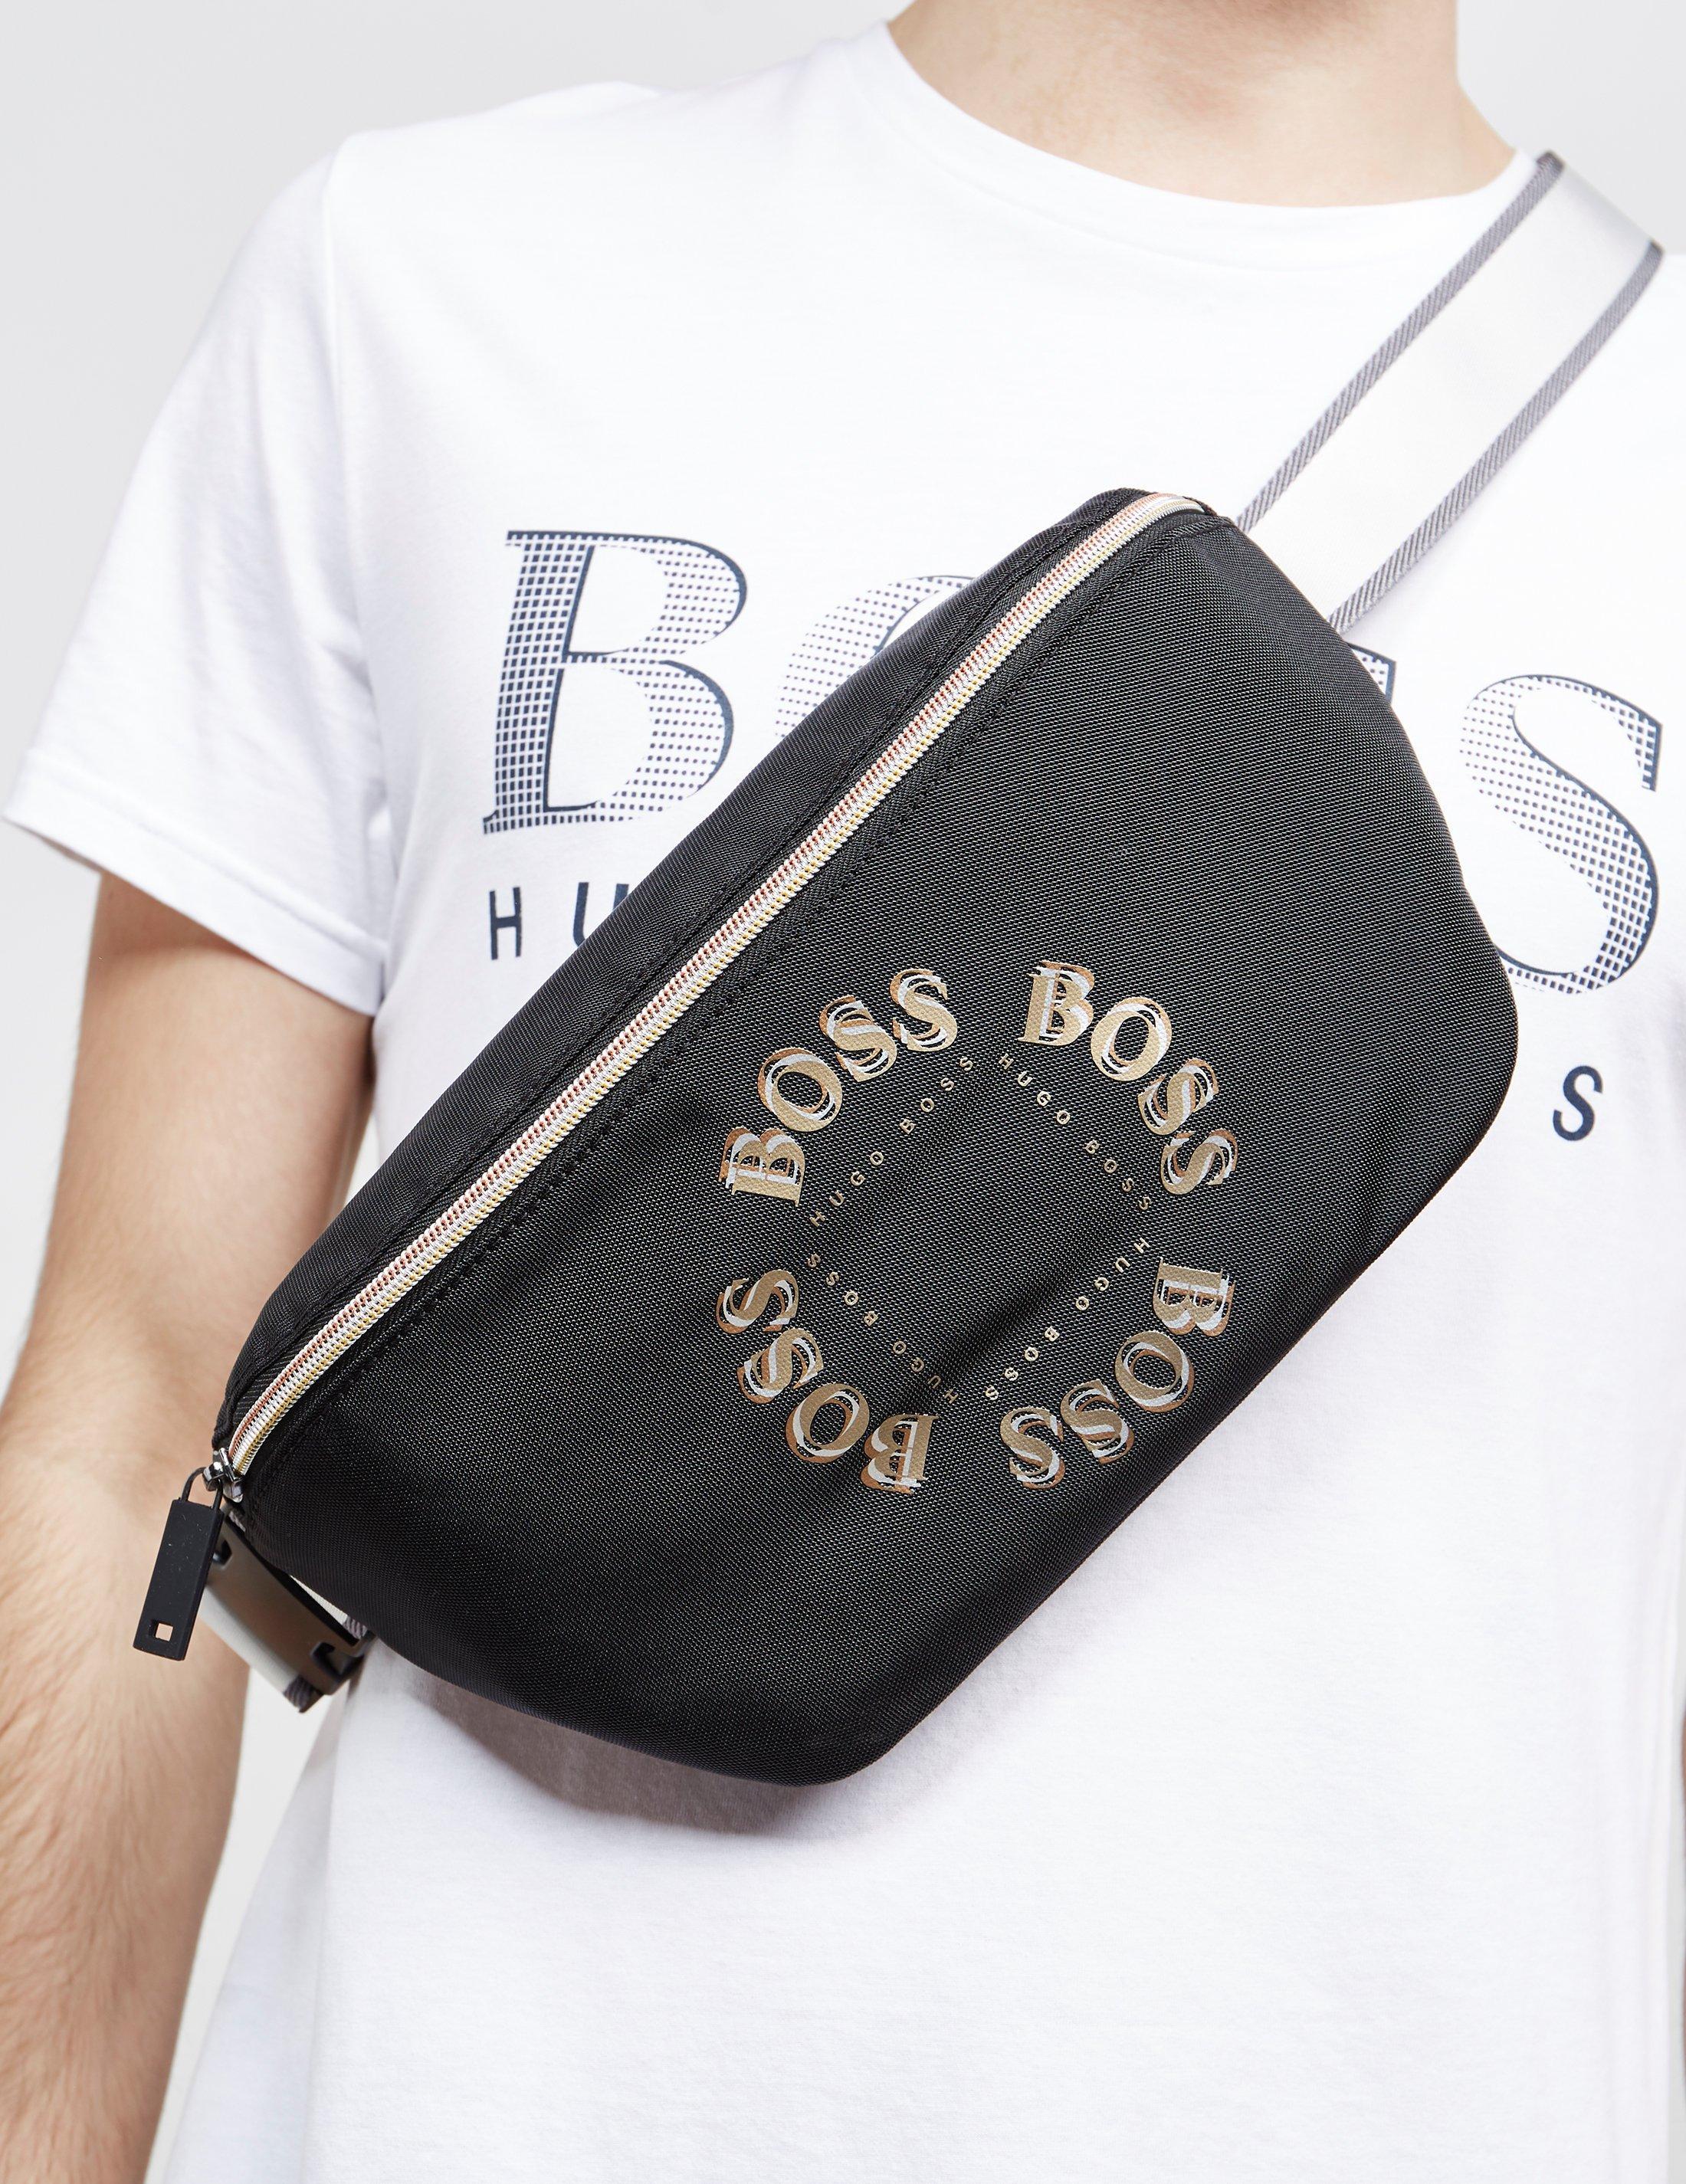 BOSS by Hugo Boss Circle Logo Bum Bag Black for Men - Lyst